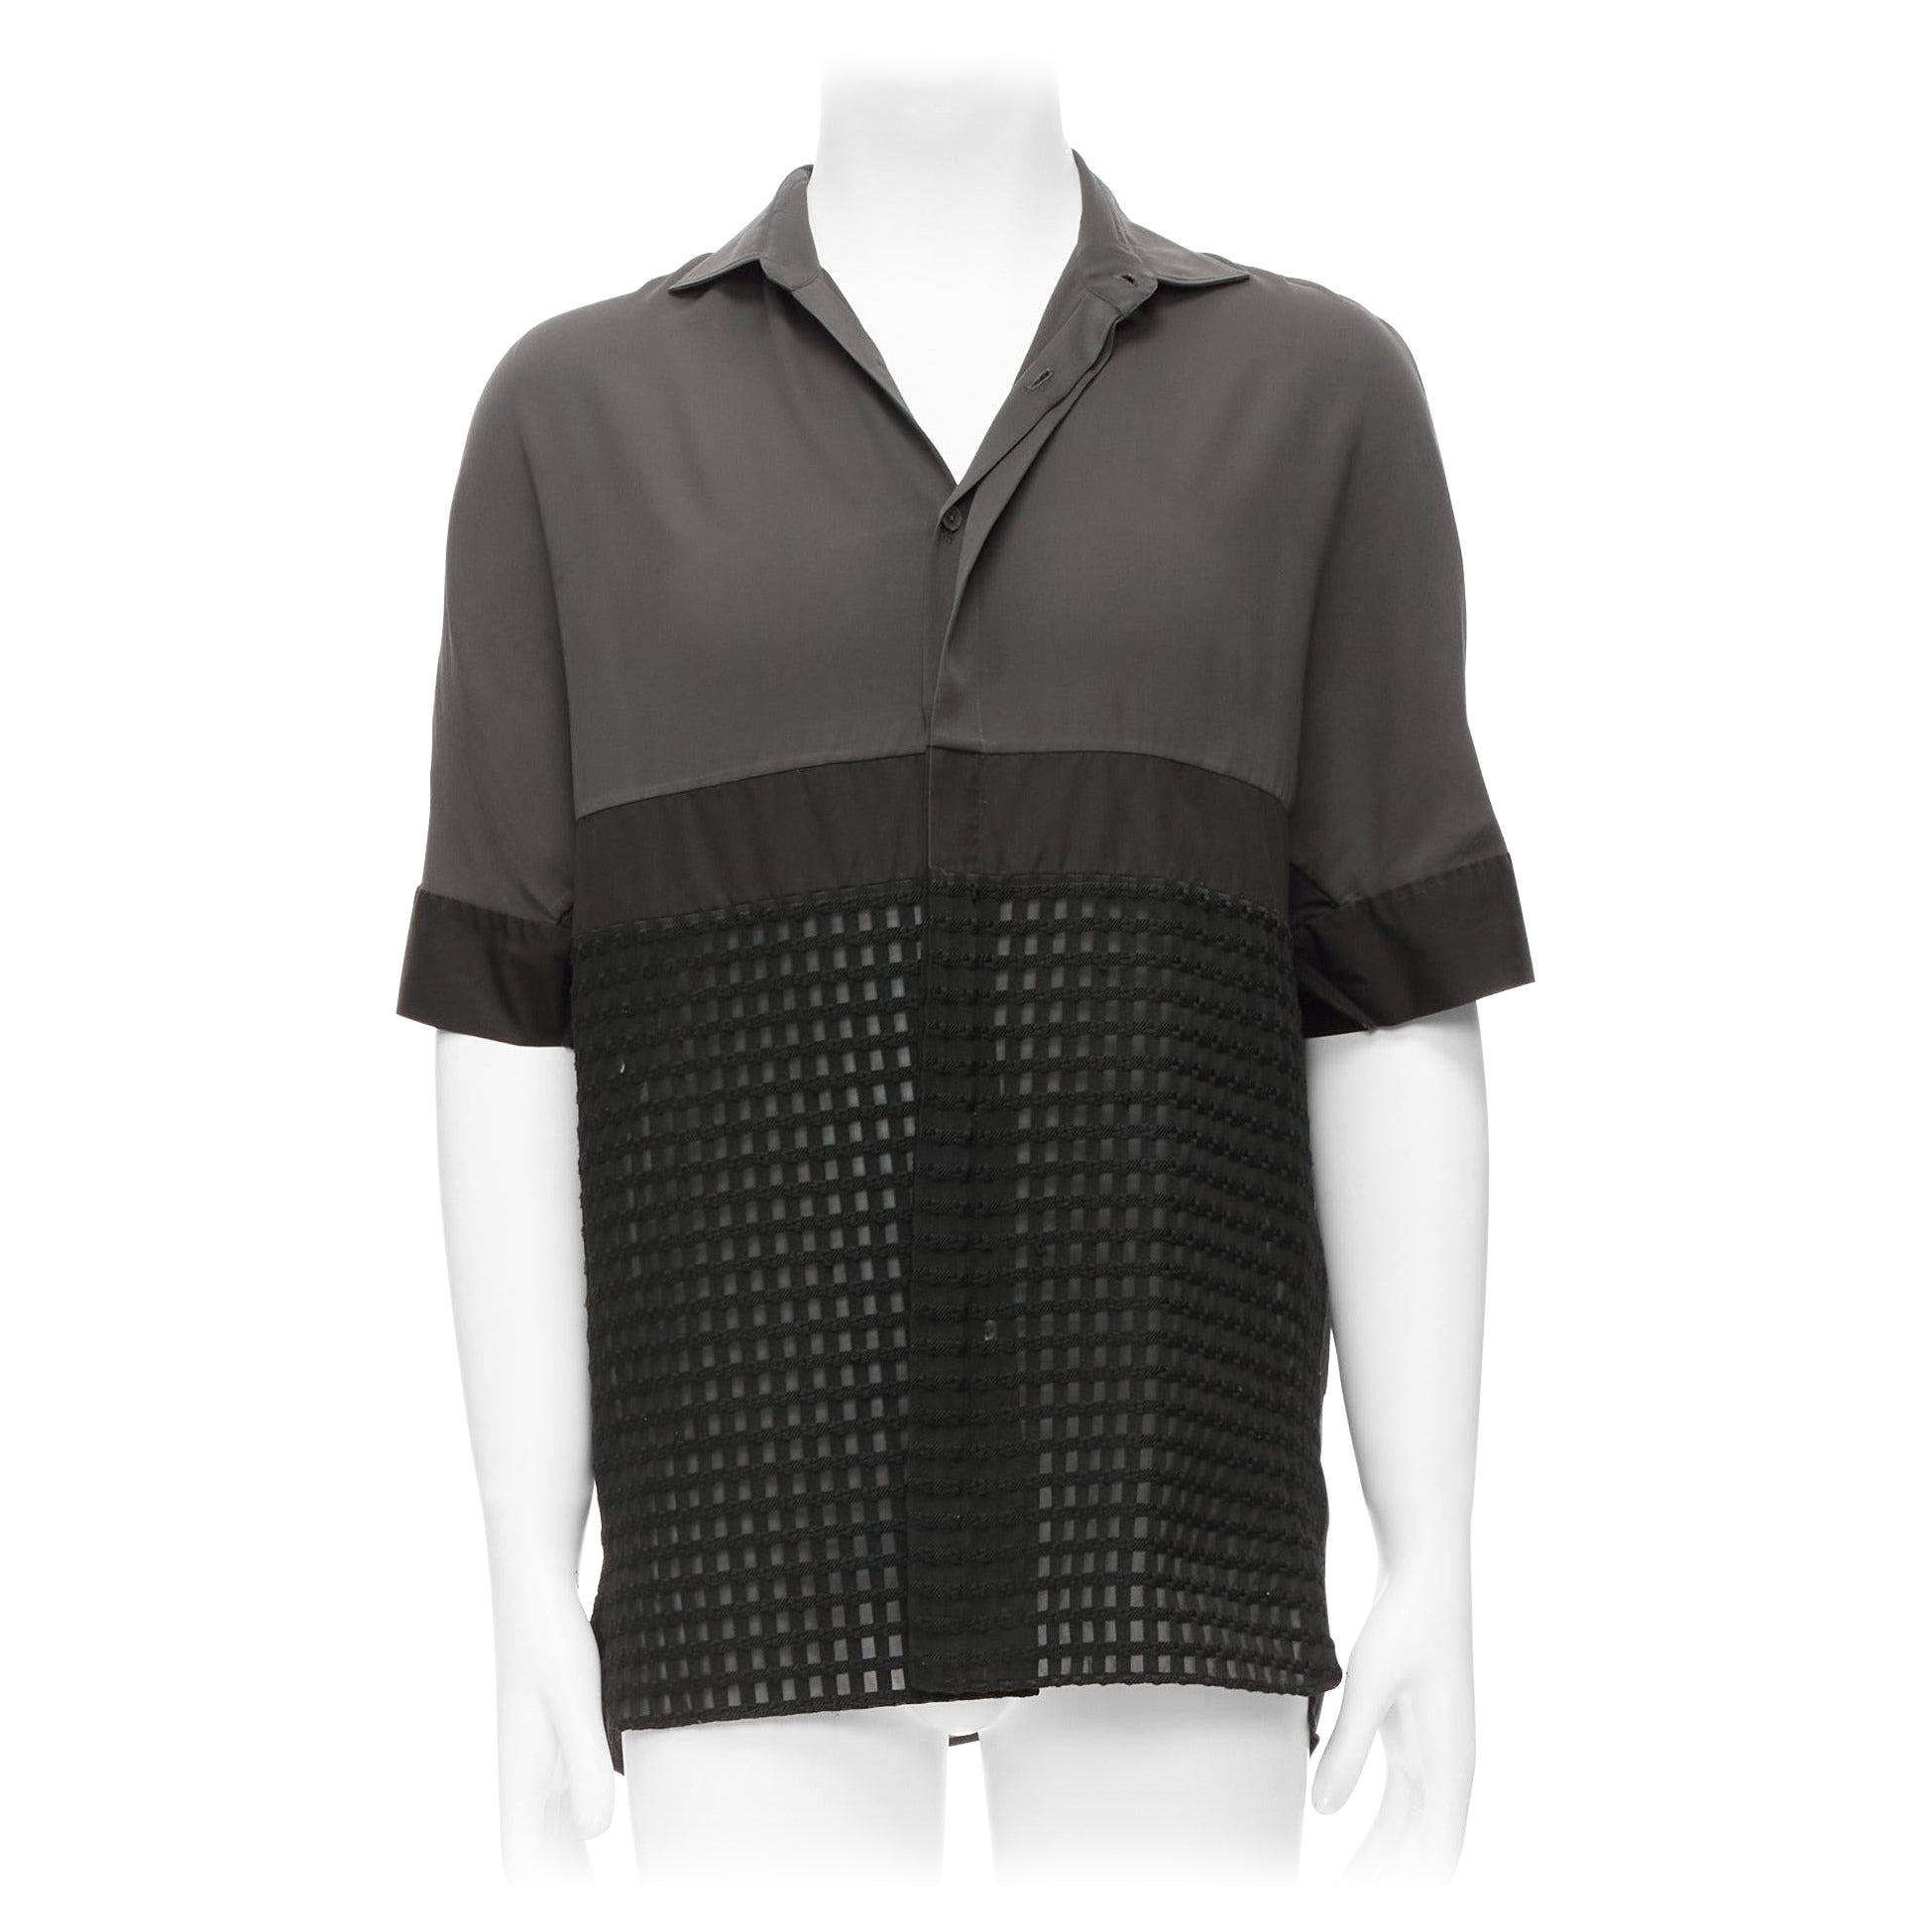 LANVIN grey black silky twill mix texture short sleeves dress shirt EU38/15 S For Sale